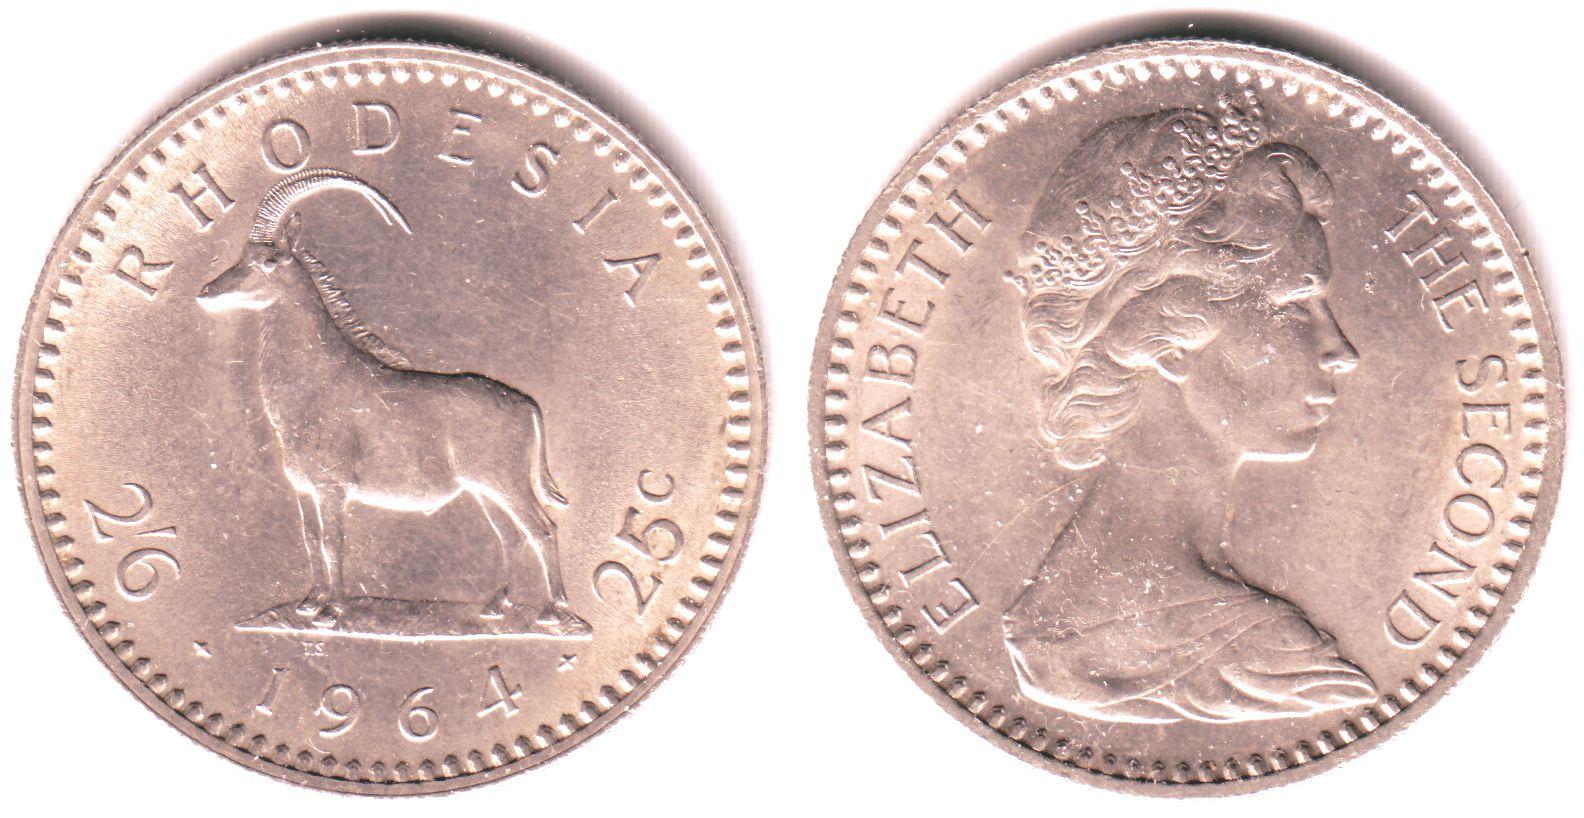 Foto Rhodesien Simbabwe 2 Shilling + 6 Pence = 25 Cent 1964 foto 530038